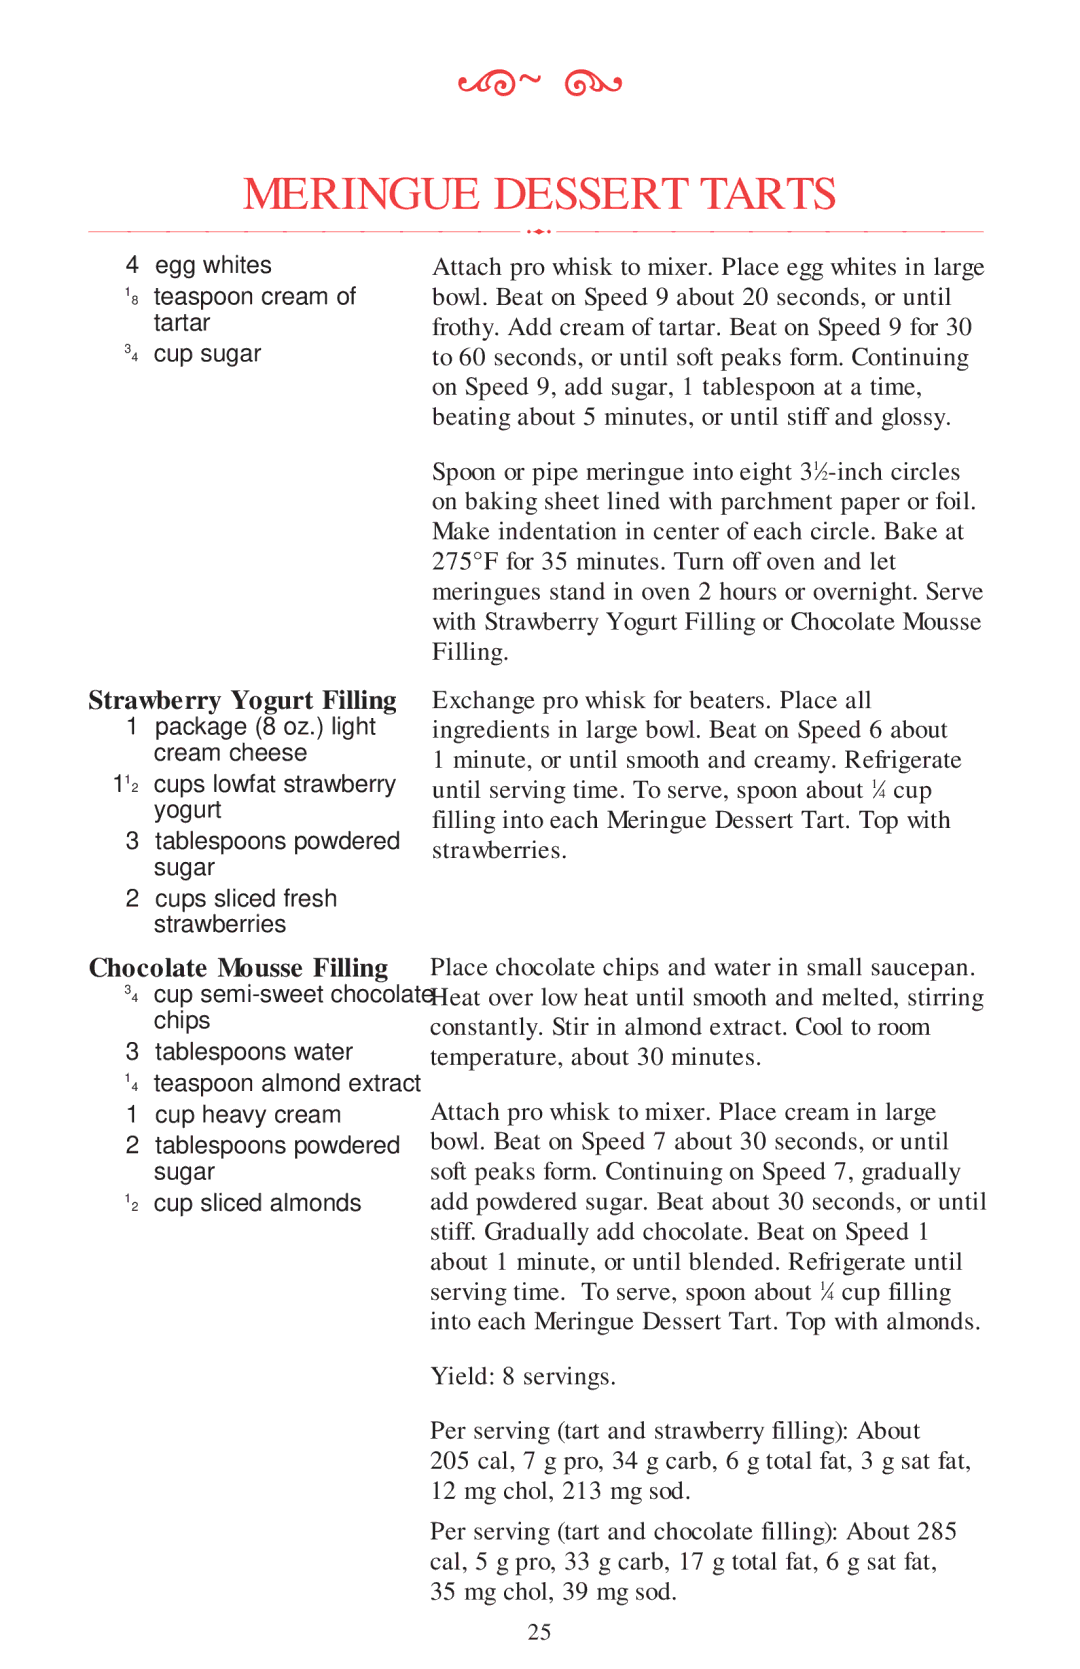 KitchenAid Mixer manual Meringue Dessert Tarts, Strawberry Yogurt Filling, Chocolate Mousse Filling 